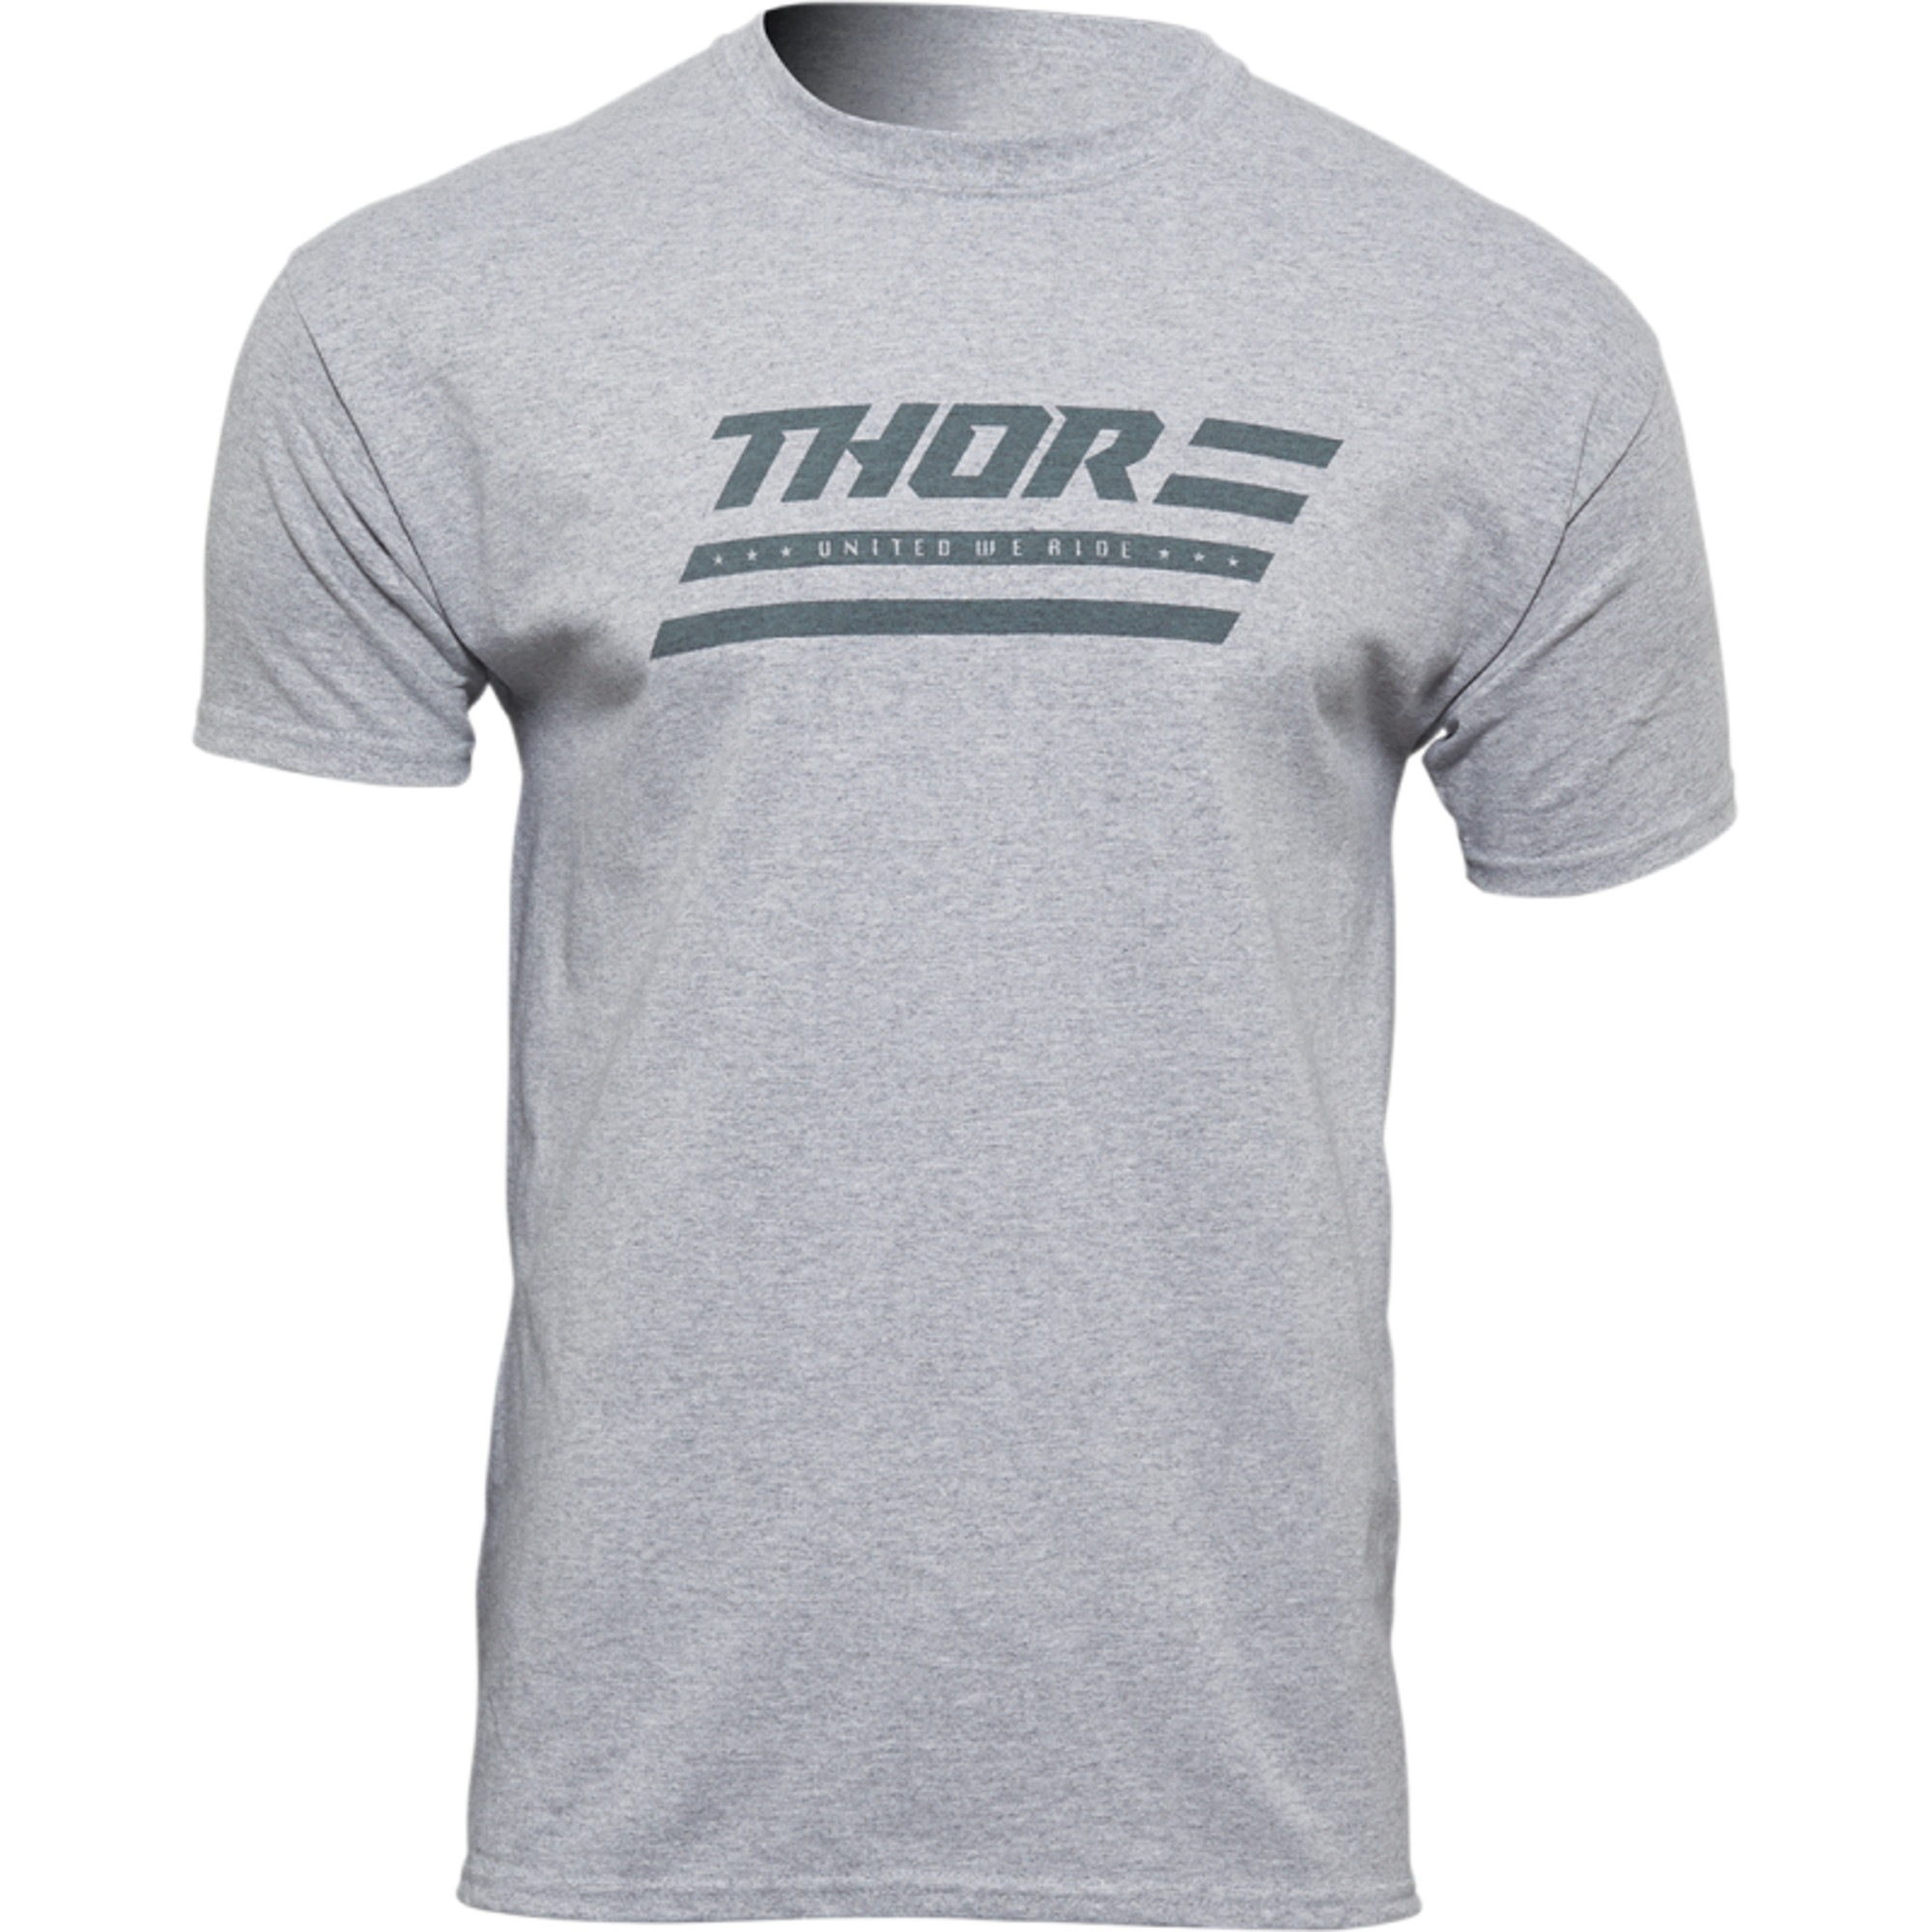 thor t-shirt shirts for men united